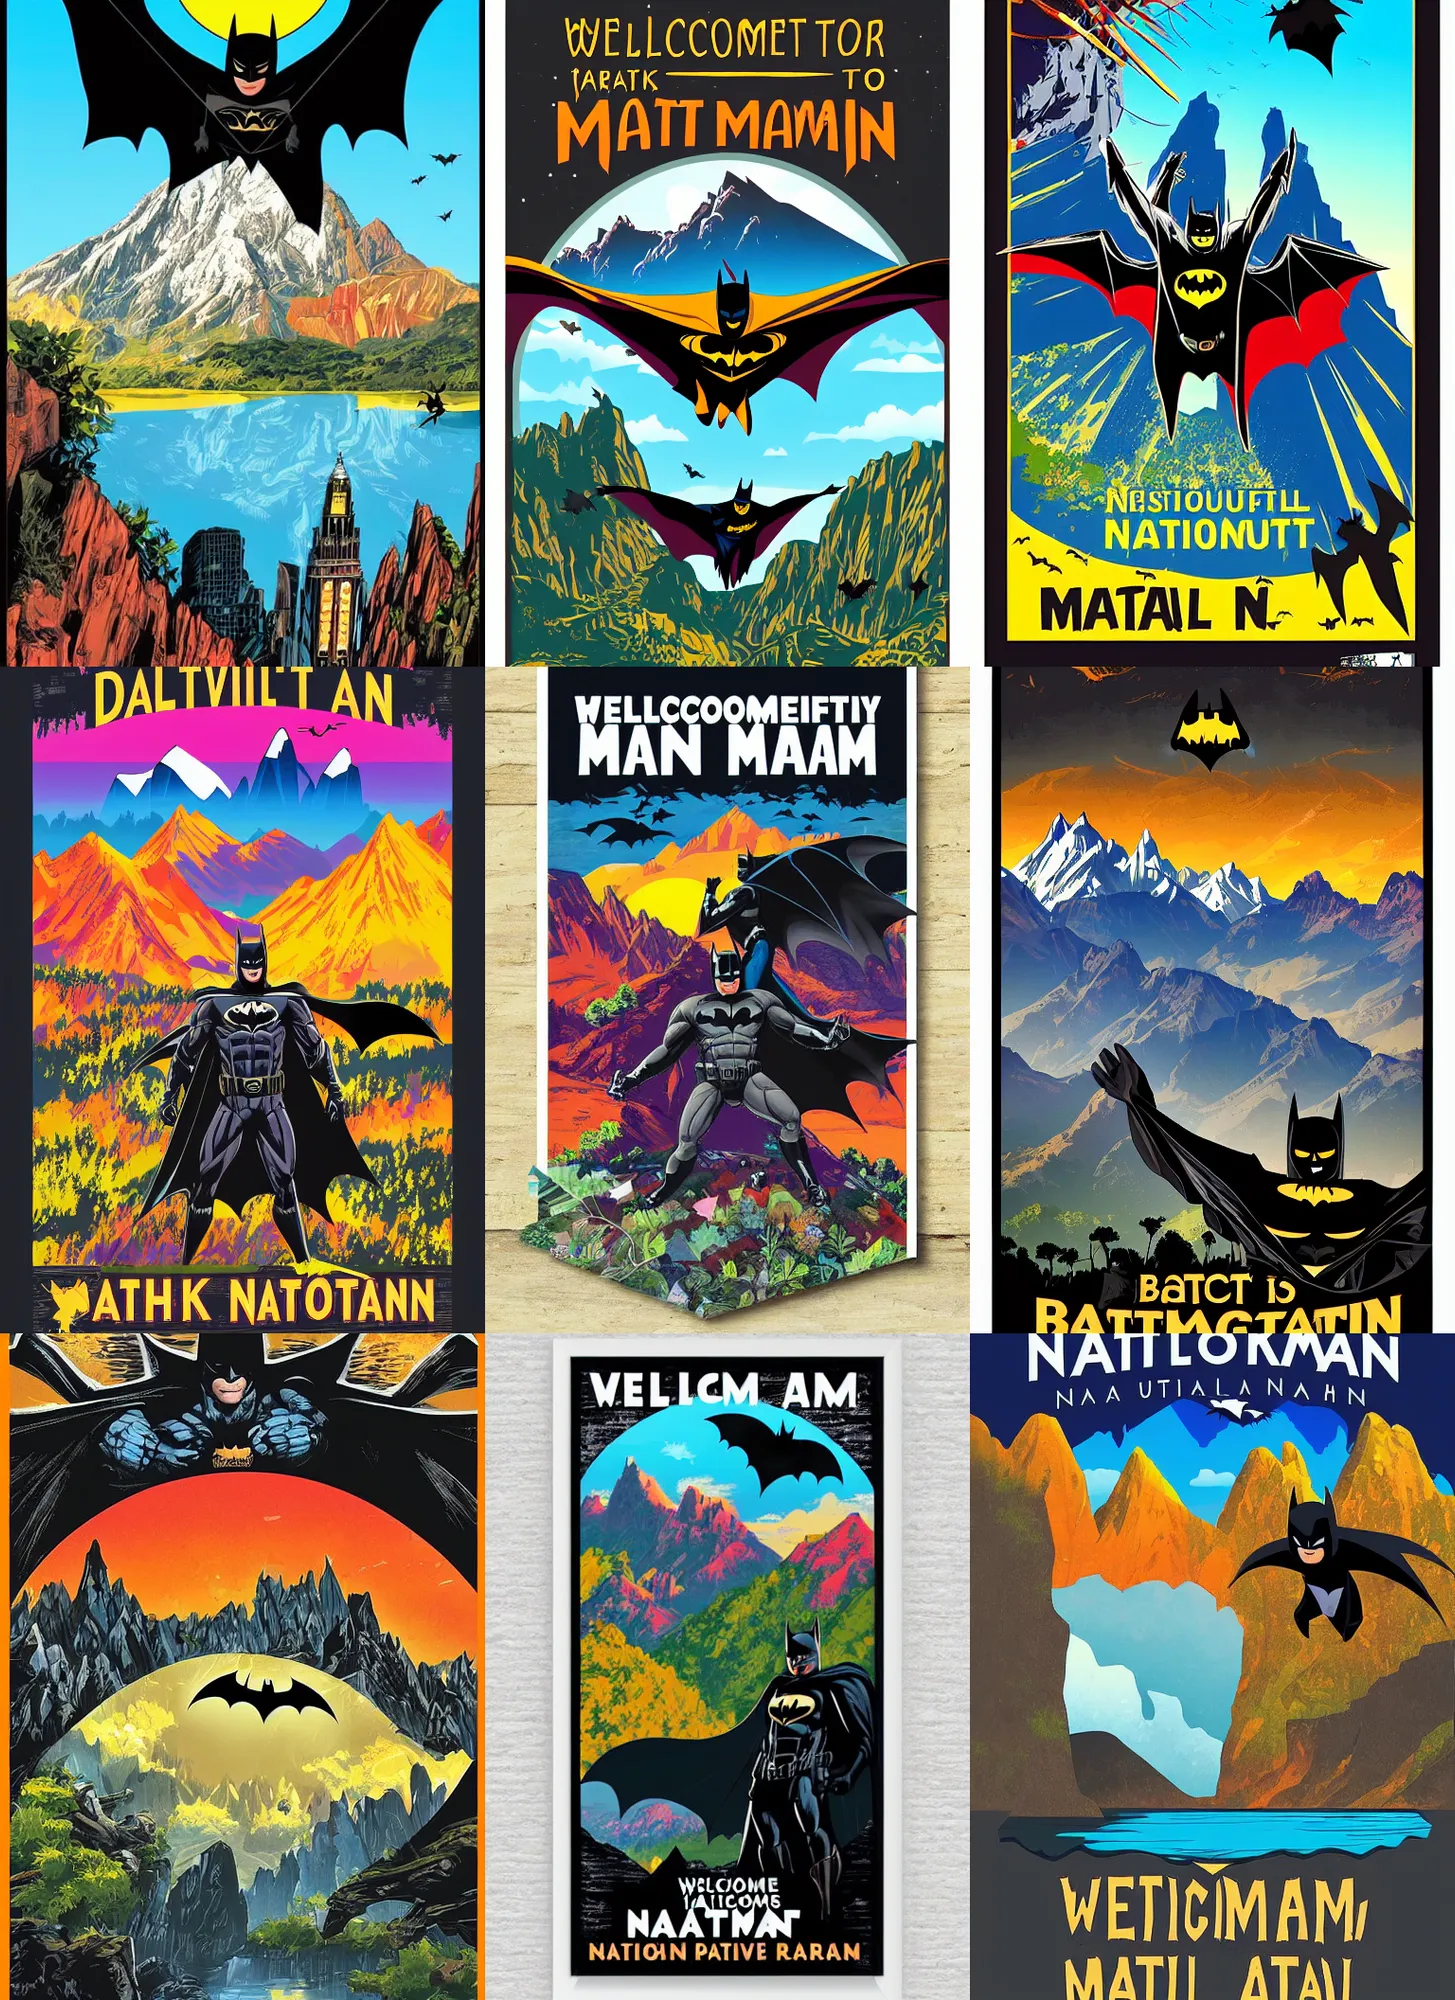 Prompt: welcome to beautiful bat man national park! dark knight, gotham, bat symbol, mountains! vibrant tourism poster, colorful, cartoon